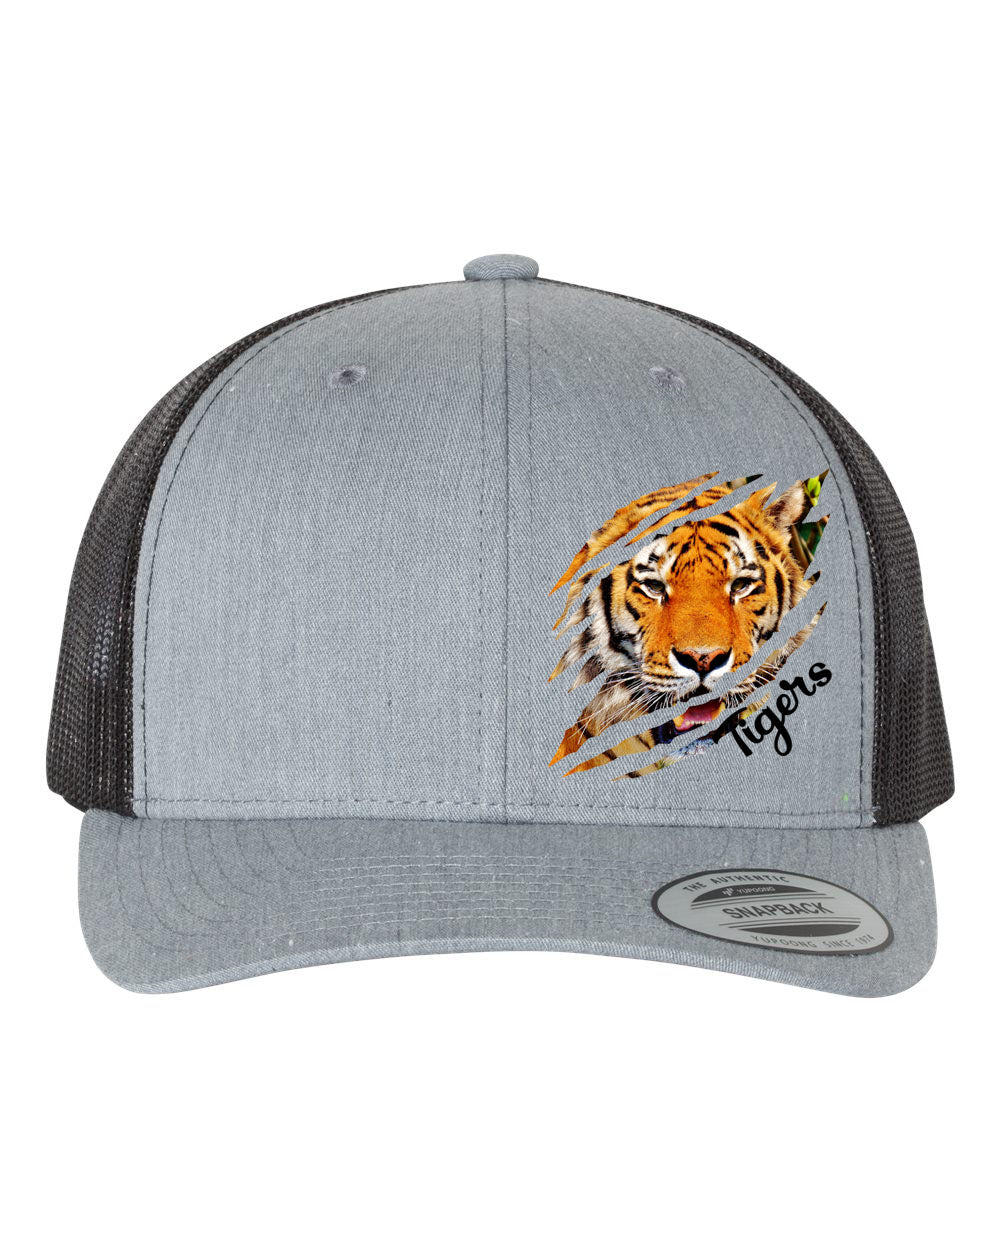 Lafayette Tigers Design 10 Trucker Hat